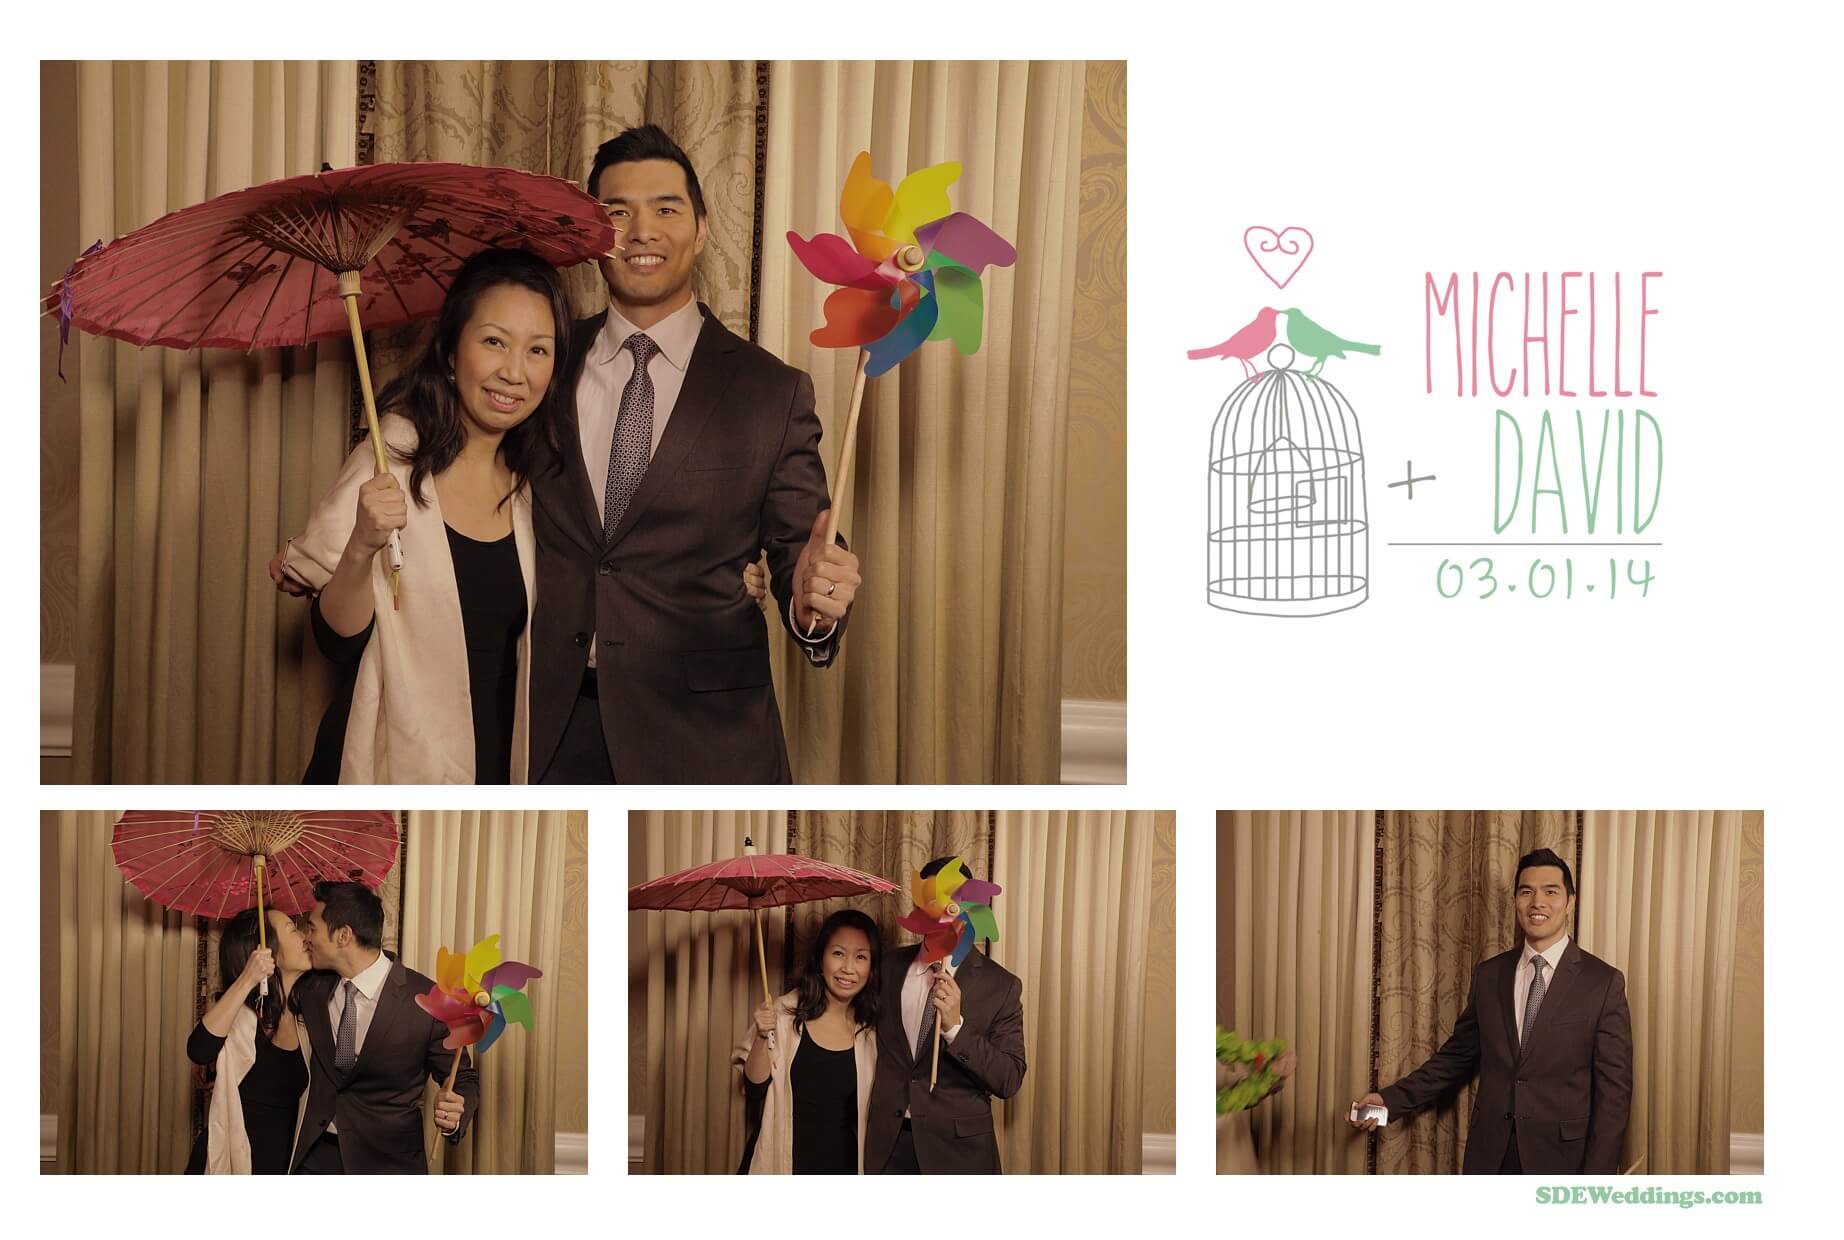 michelle david wedding photobooth photo